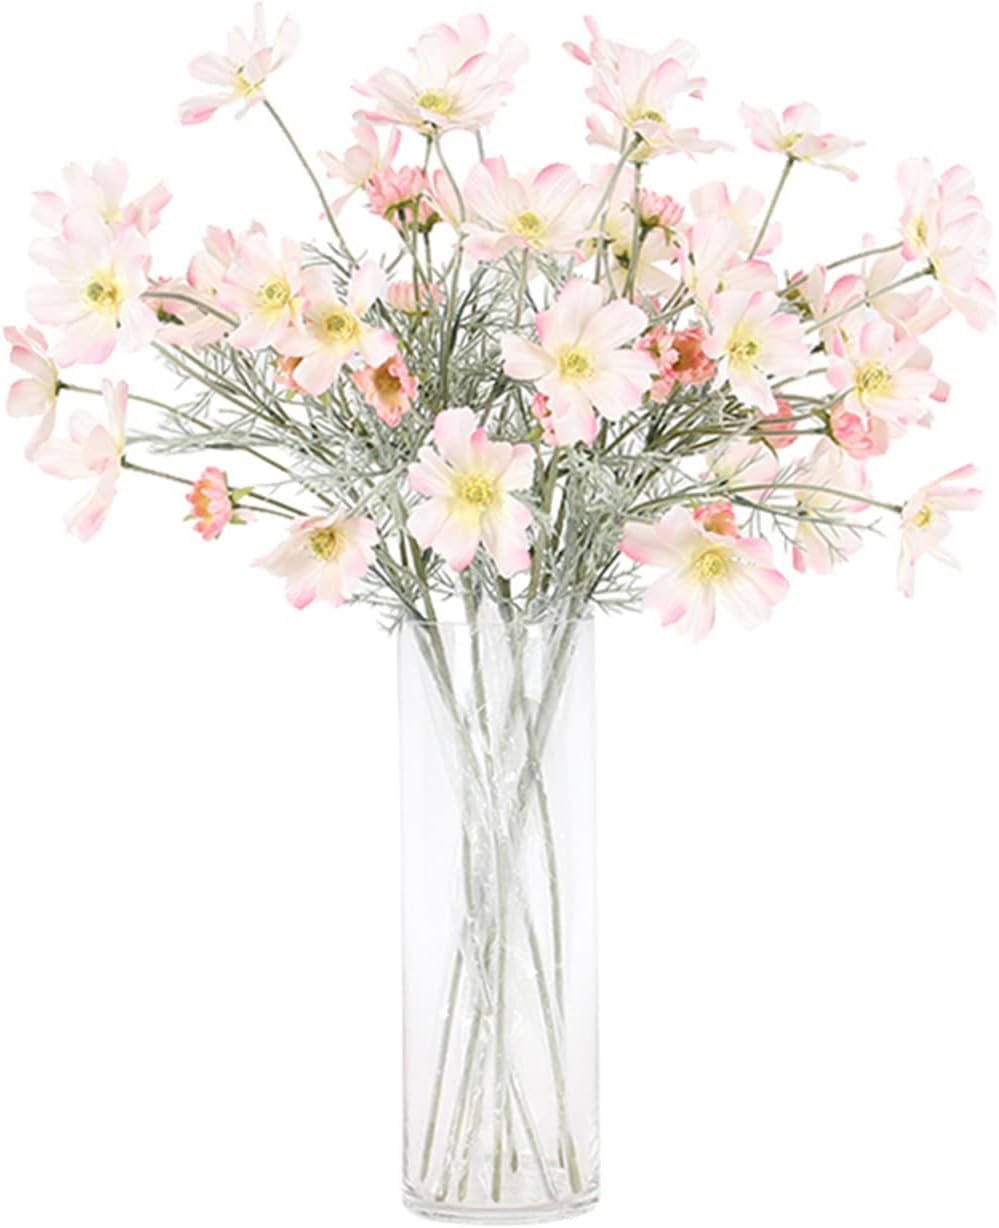 2 Artificial Flowers Plants Calliopsis Silk Flower Arrangements. Wedding Bouquet Decorations Plastic floral table centerpieces for home, kitchen, and garden party decor Approx. 23.6&#x27;&#x27; High - Light Pink